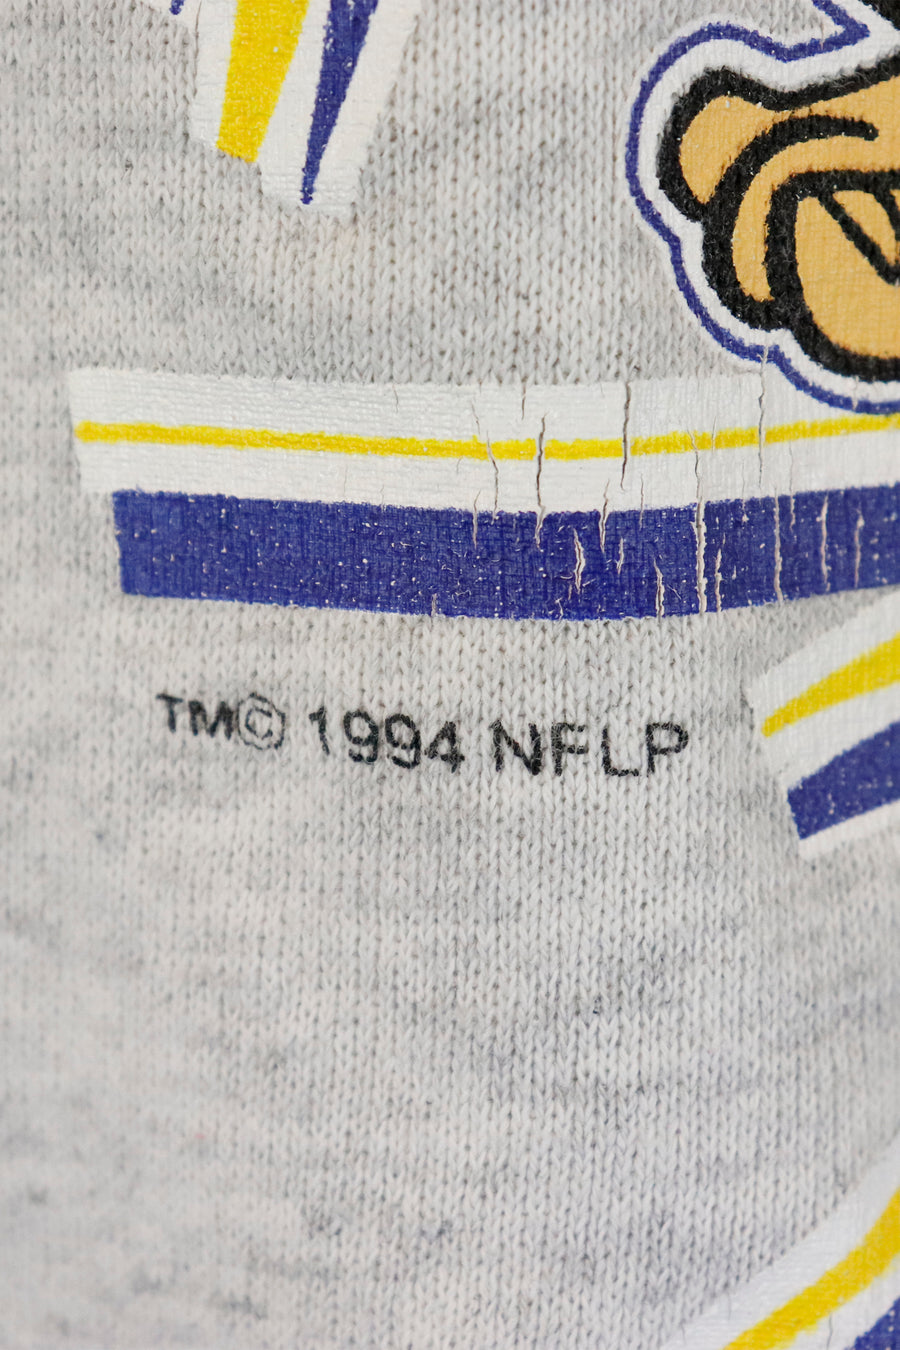 Vintage 1994 NFL Vikings Flinstones Sweatshirt Sz L